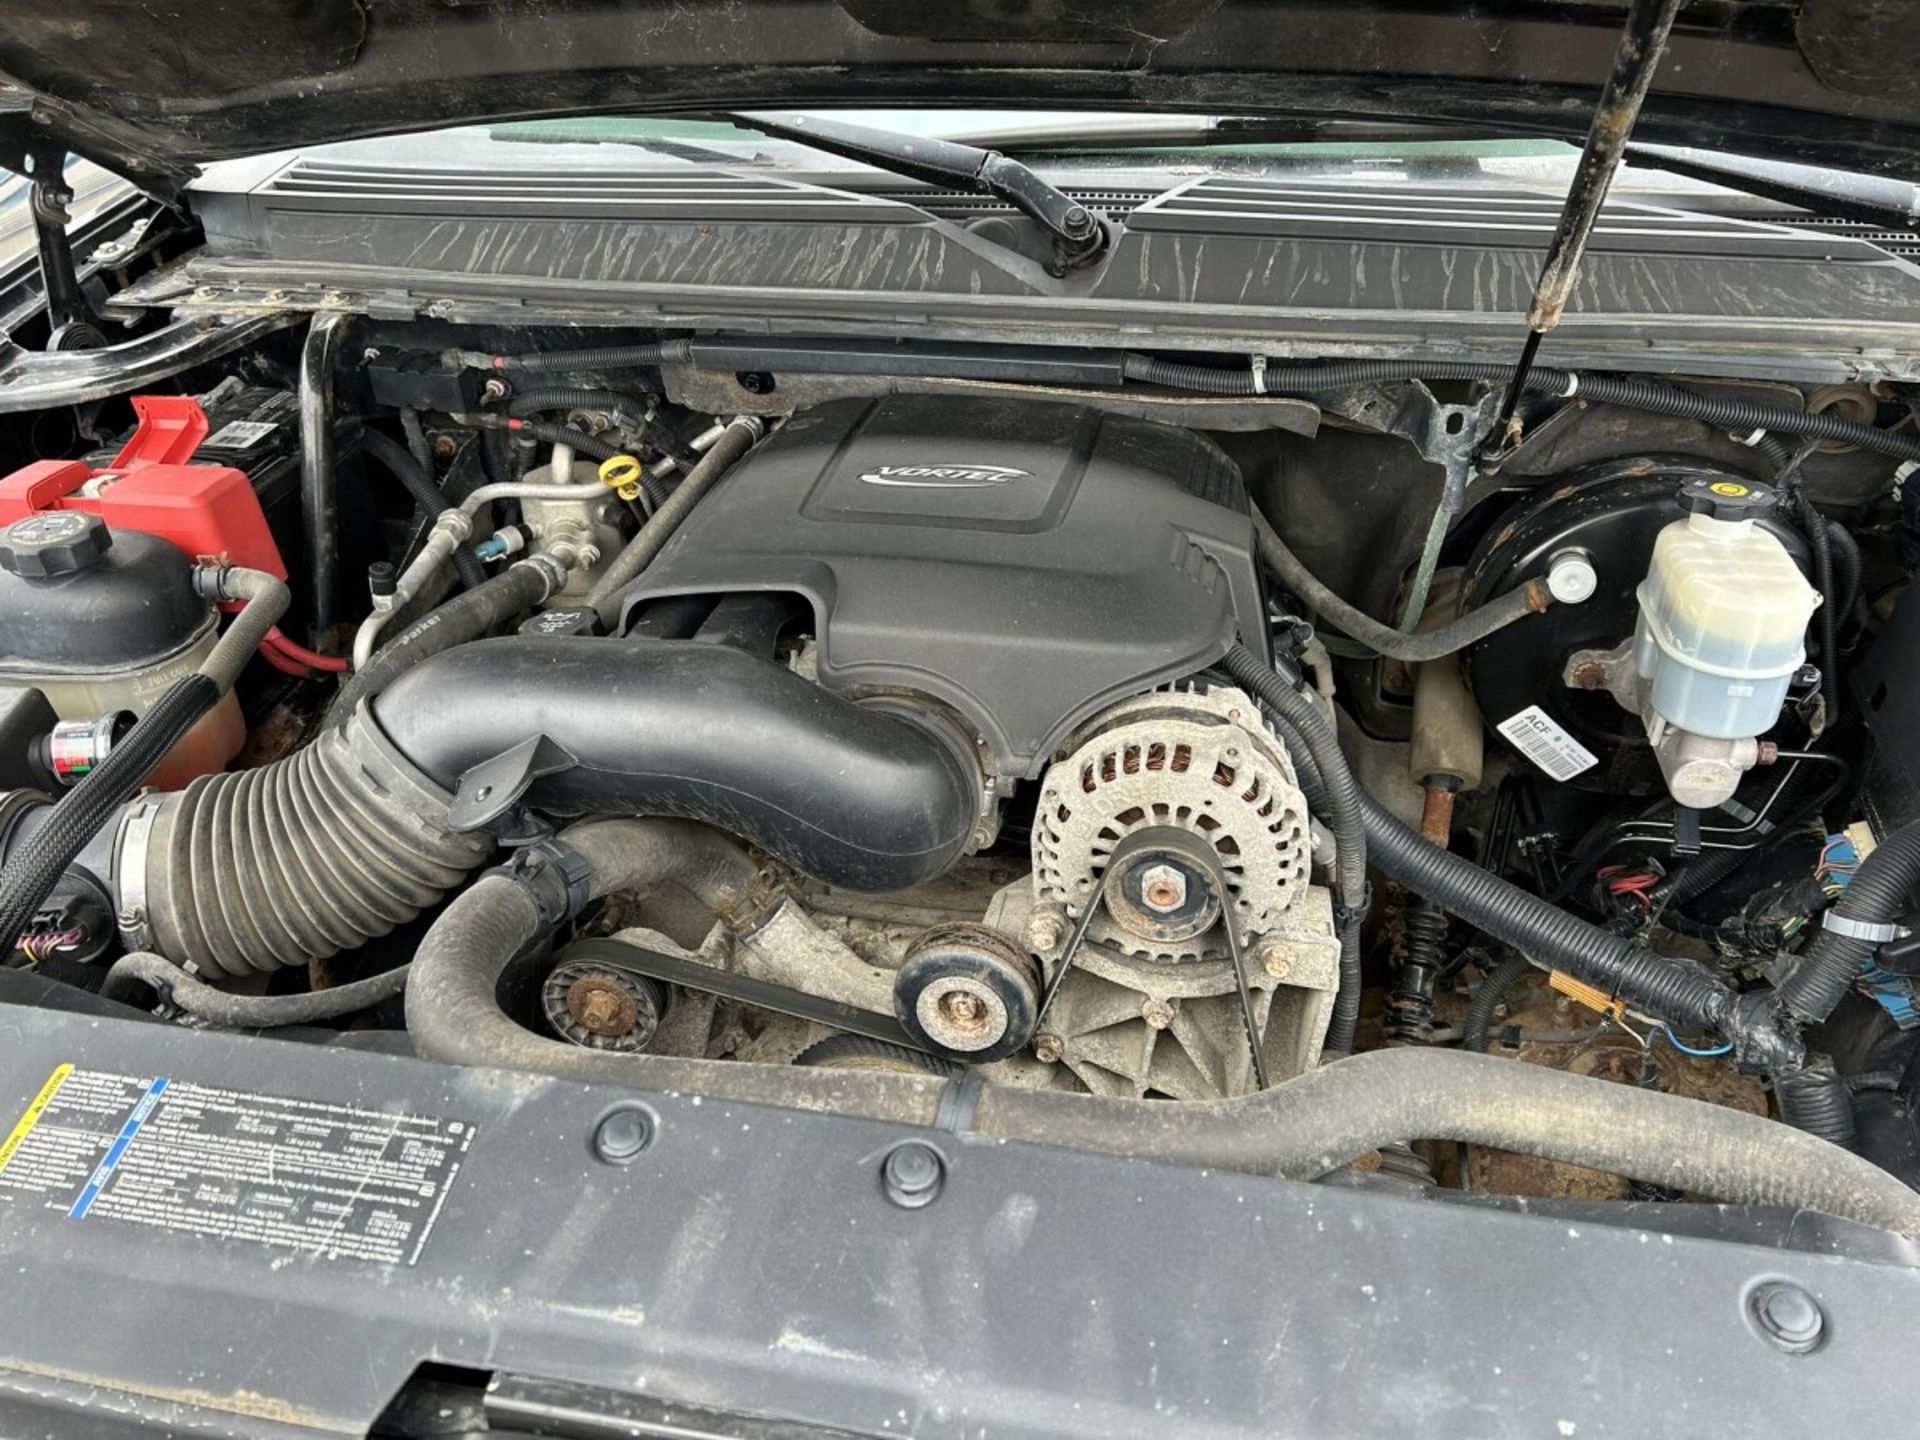 2007 GMC DENALI SUV, VORTEC V8 ENGINE, AT/AL/T/C/AM/FM/CD/PW/PL/PS - LEATHER, SUNROOF 471,283 KM'S - Image 13 of 18